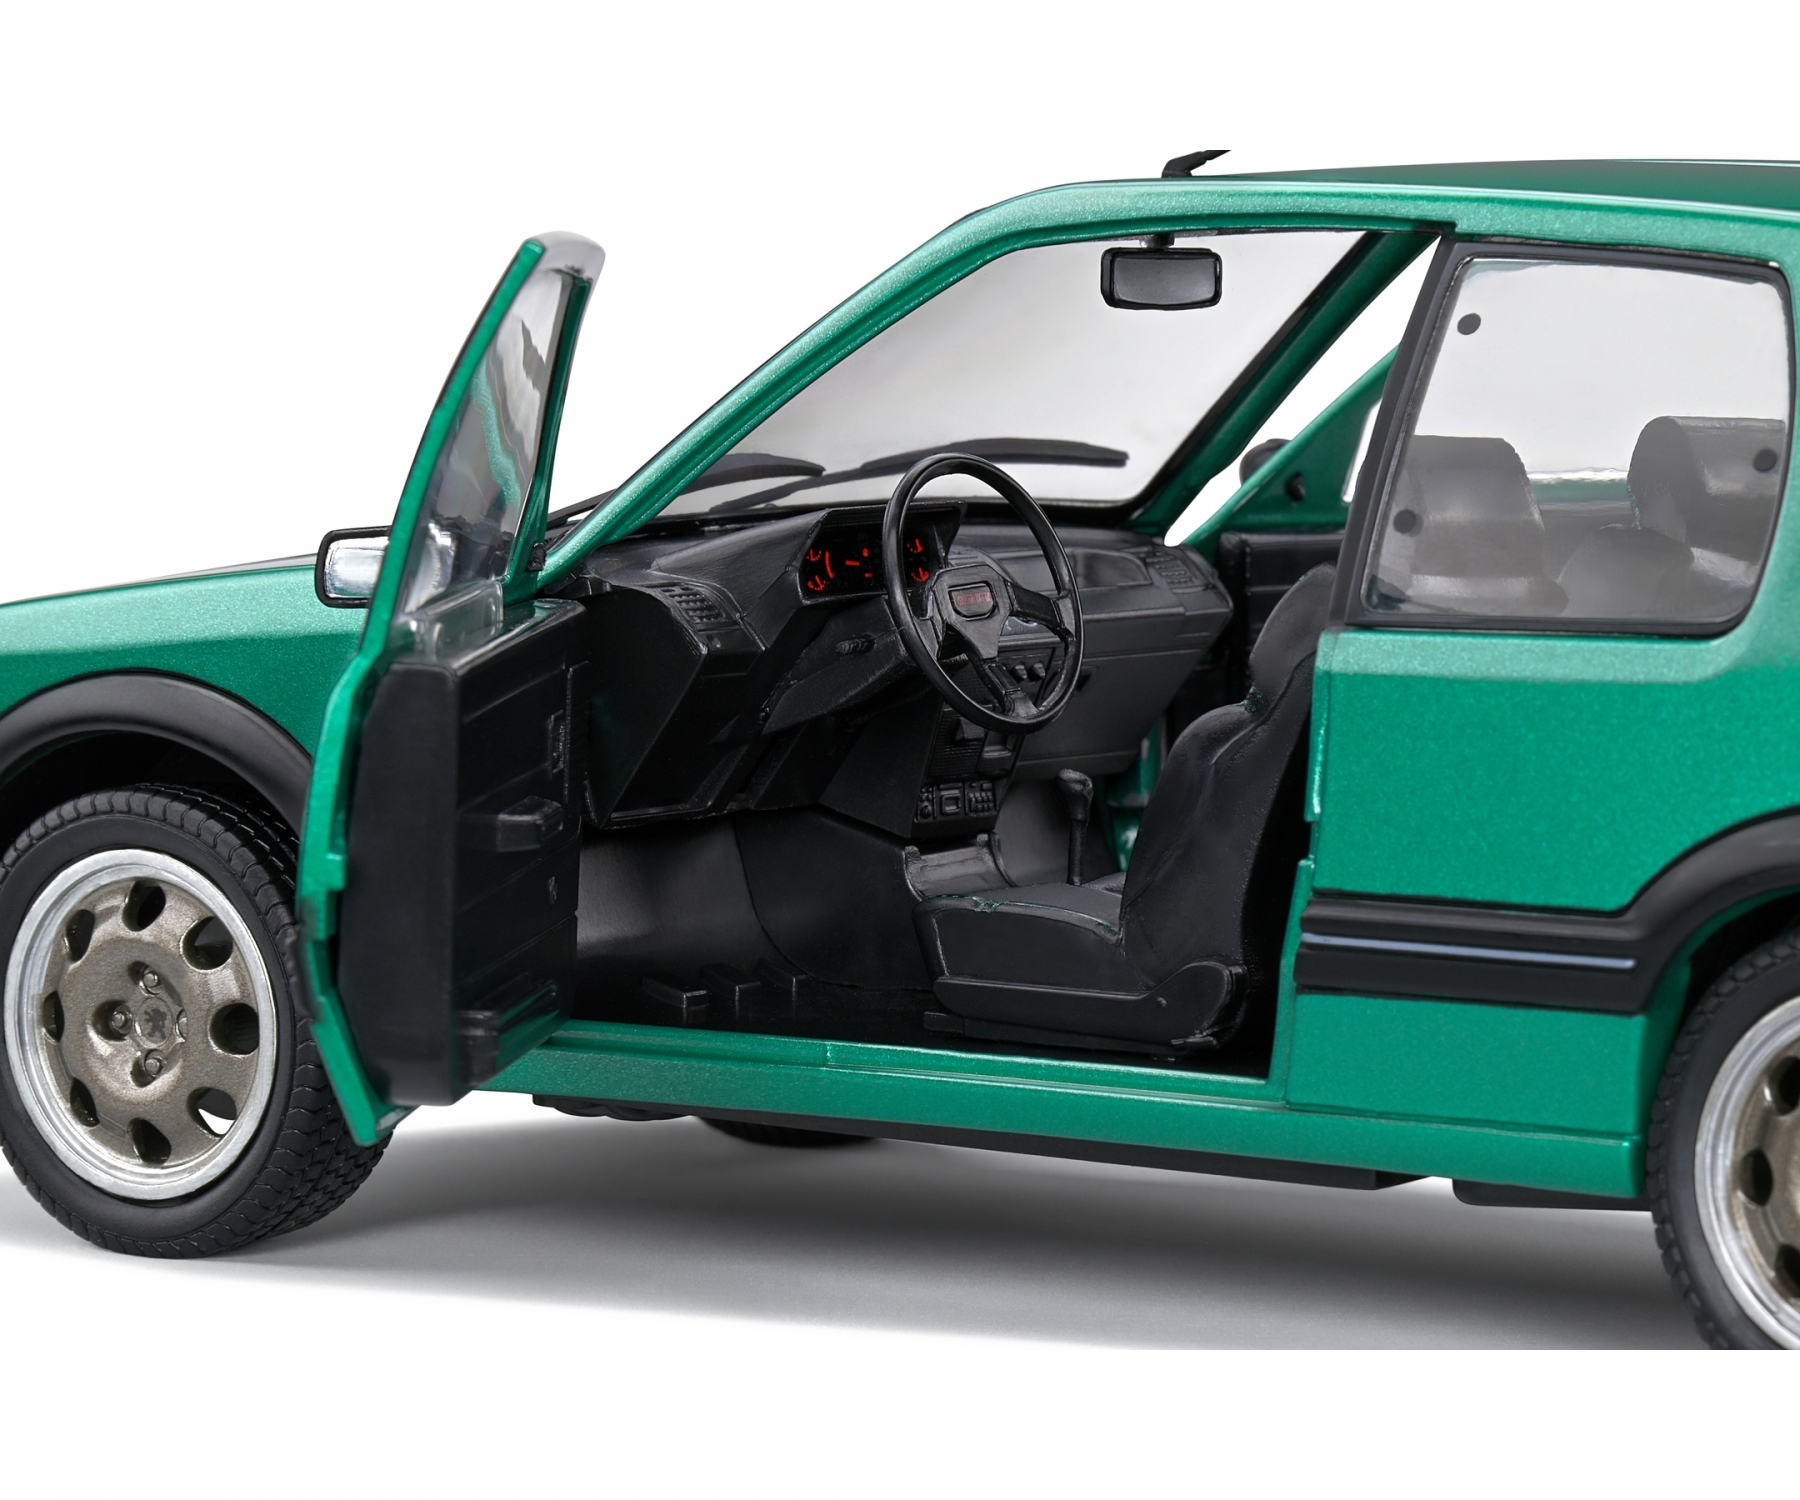 solido-S1801712-2-Peugeot-205-GTI-Griffe-Vert-Flouride-grün-metallic-Cockpit